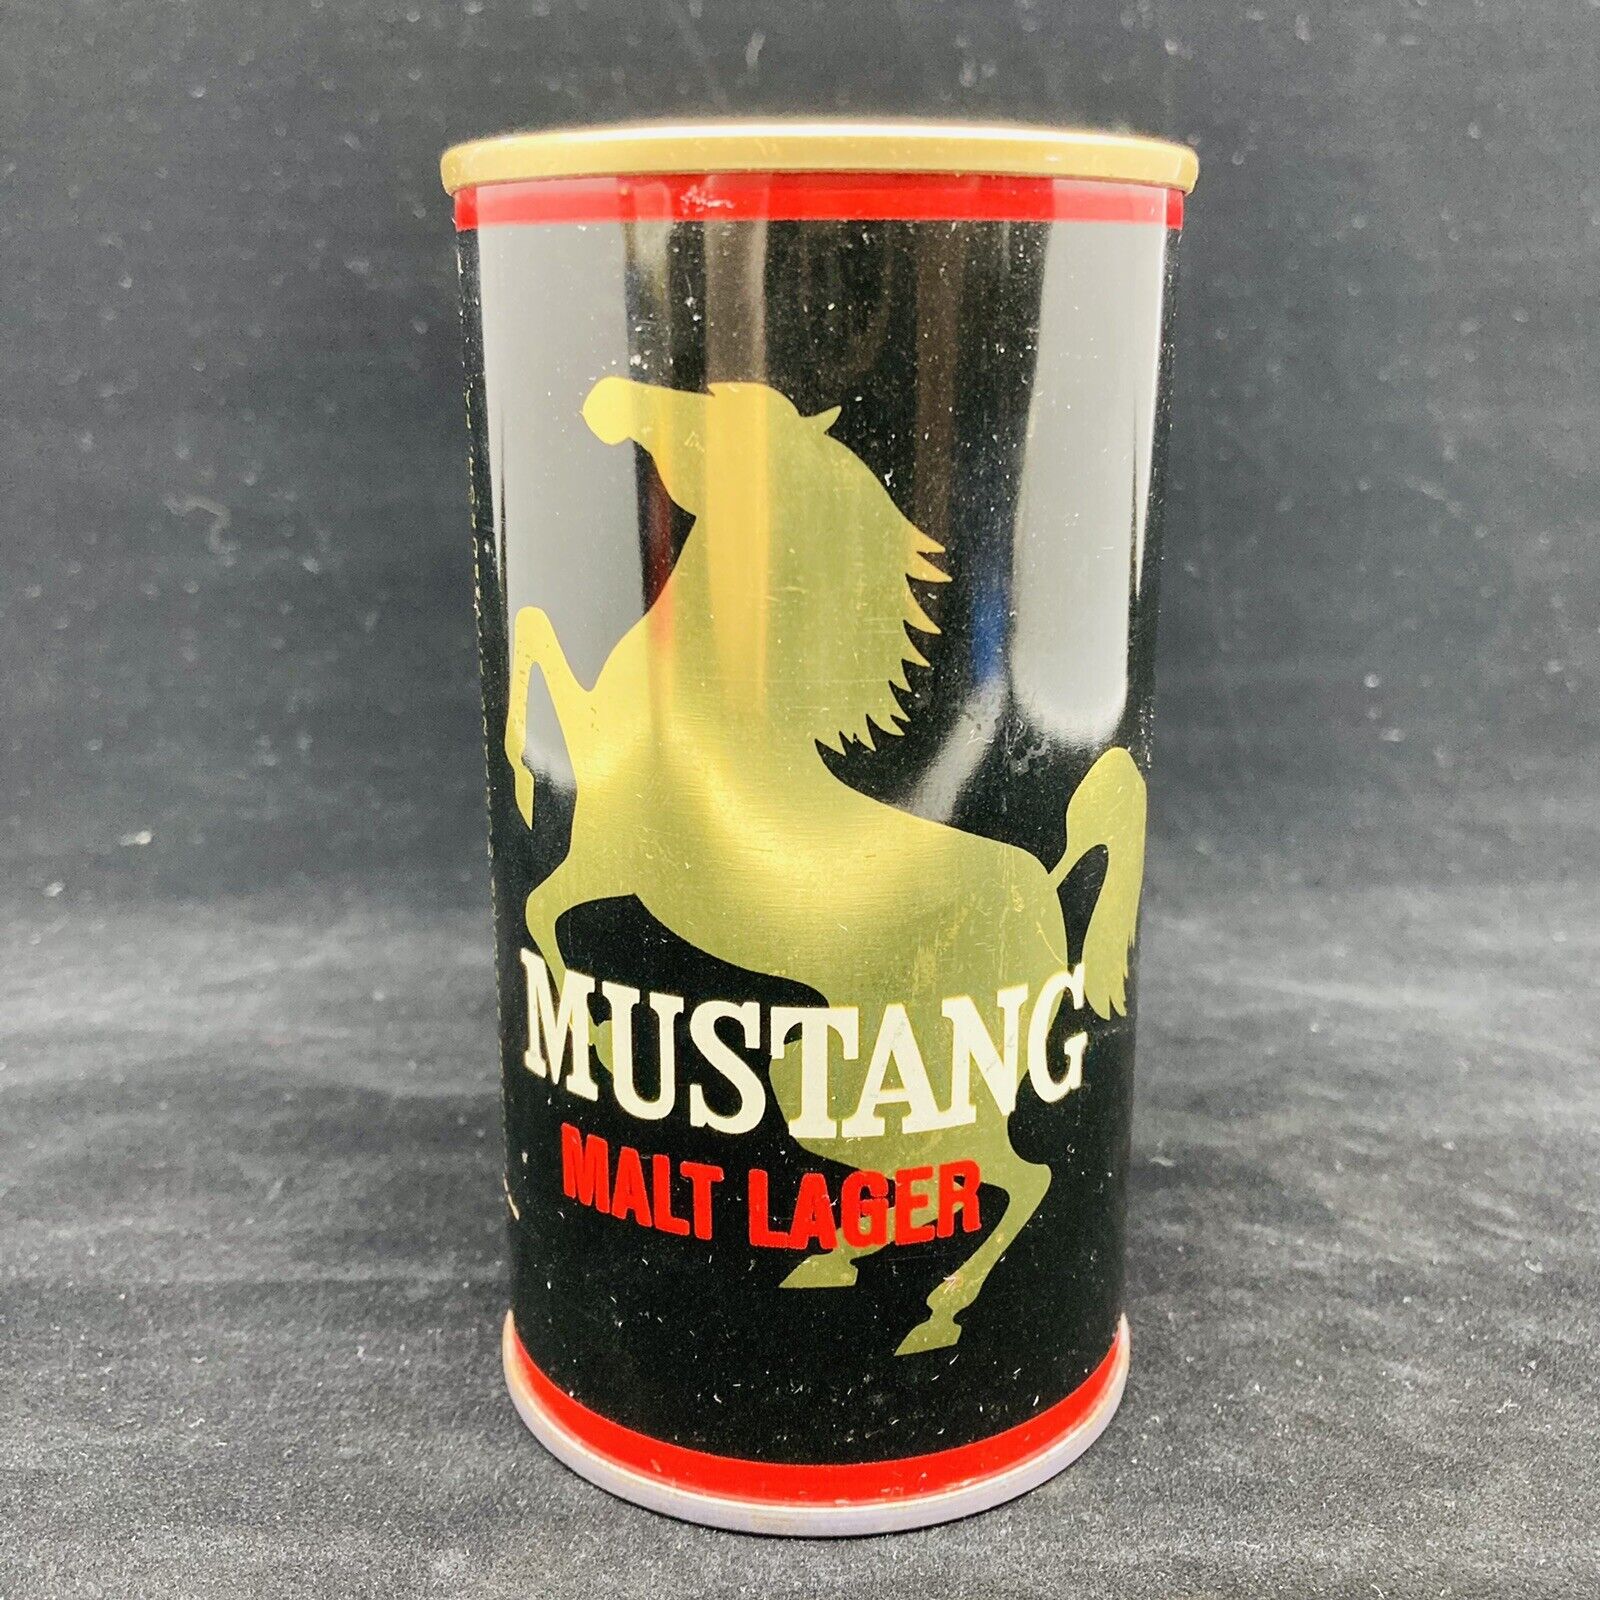 Mustang Malt Lager Tab Top Beer Can, Original, B.O CLEAN, PITTSBURGH, PA